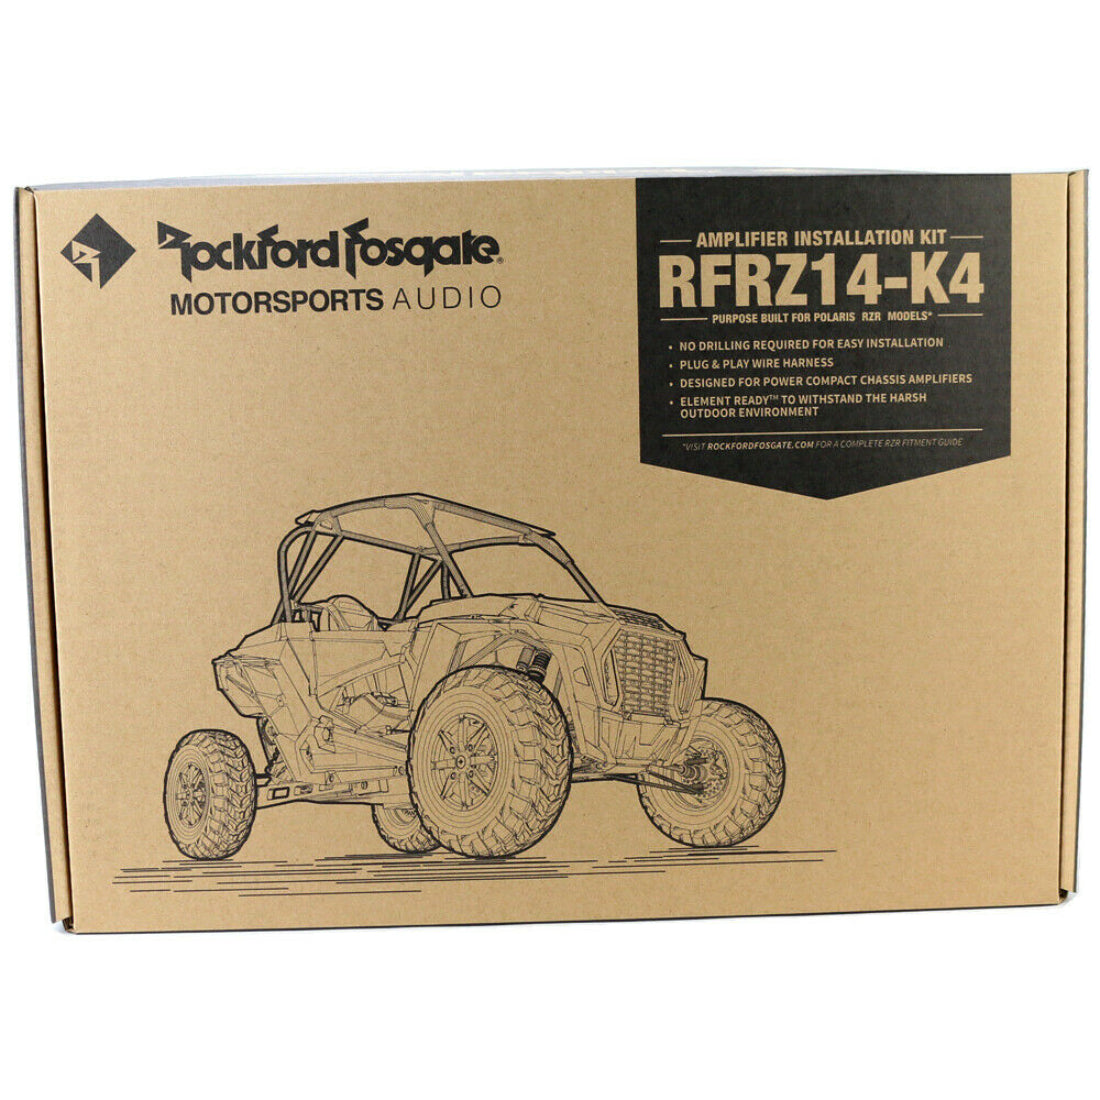 Rockford Fosgate RFRZ14-K4 4 AWG Amp Kit & Mounting Plate for Select Polaris RZR